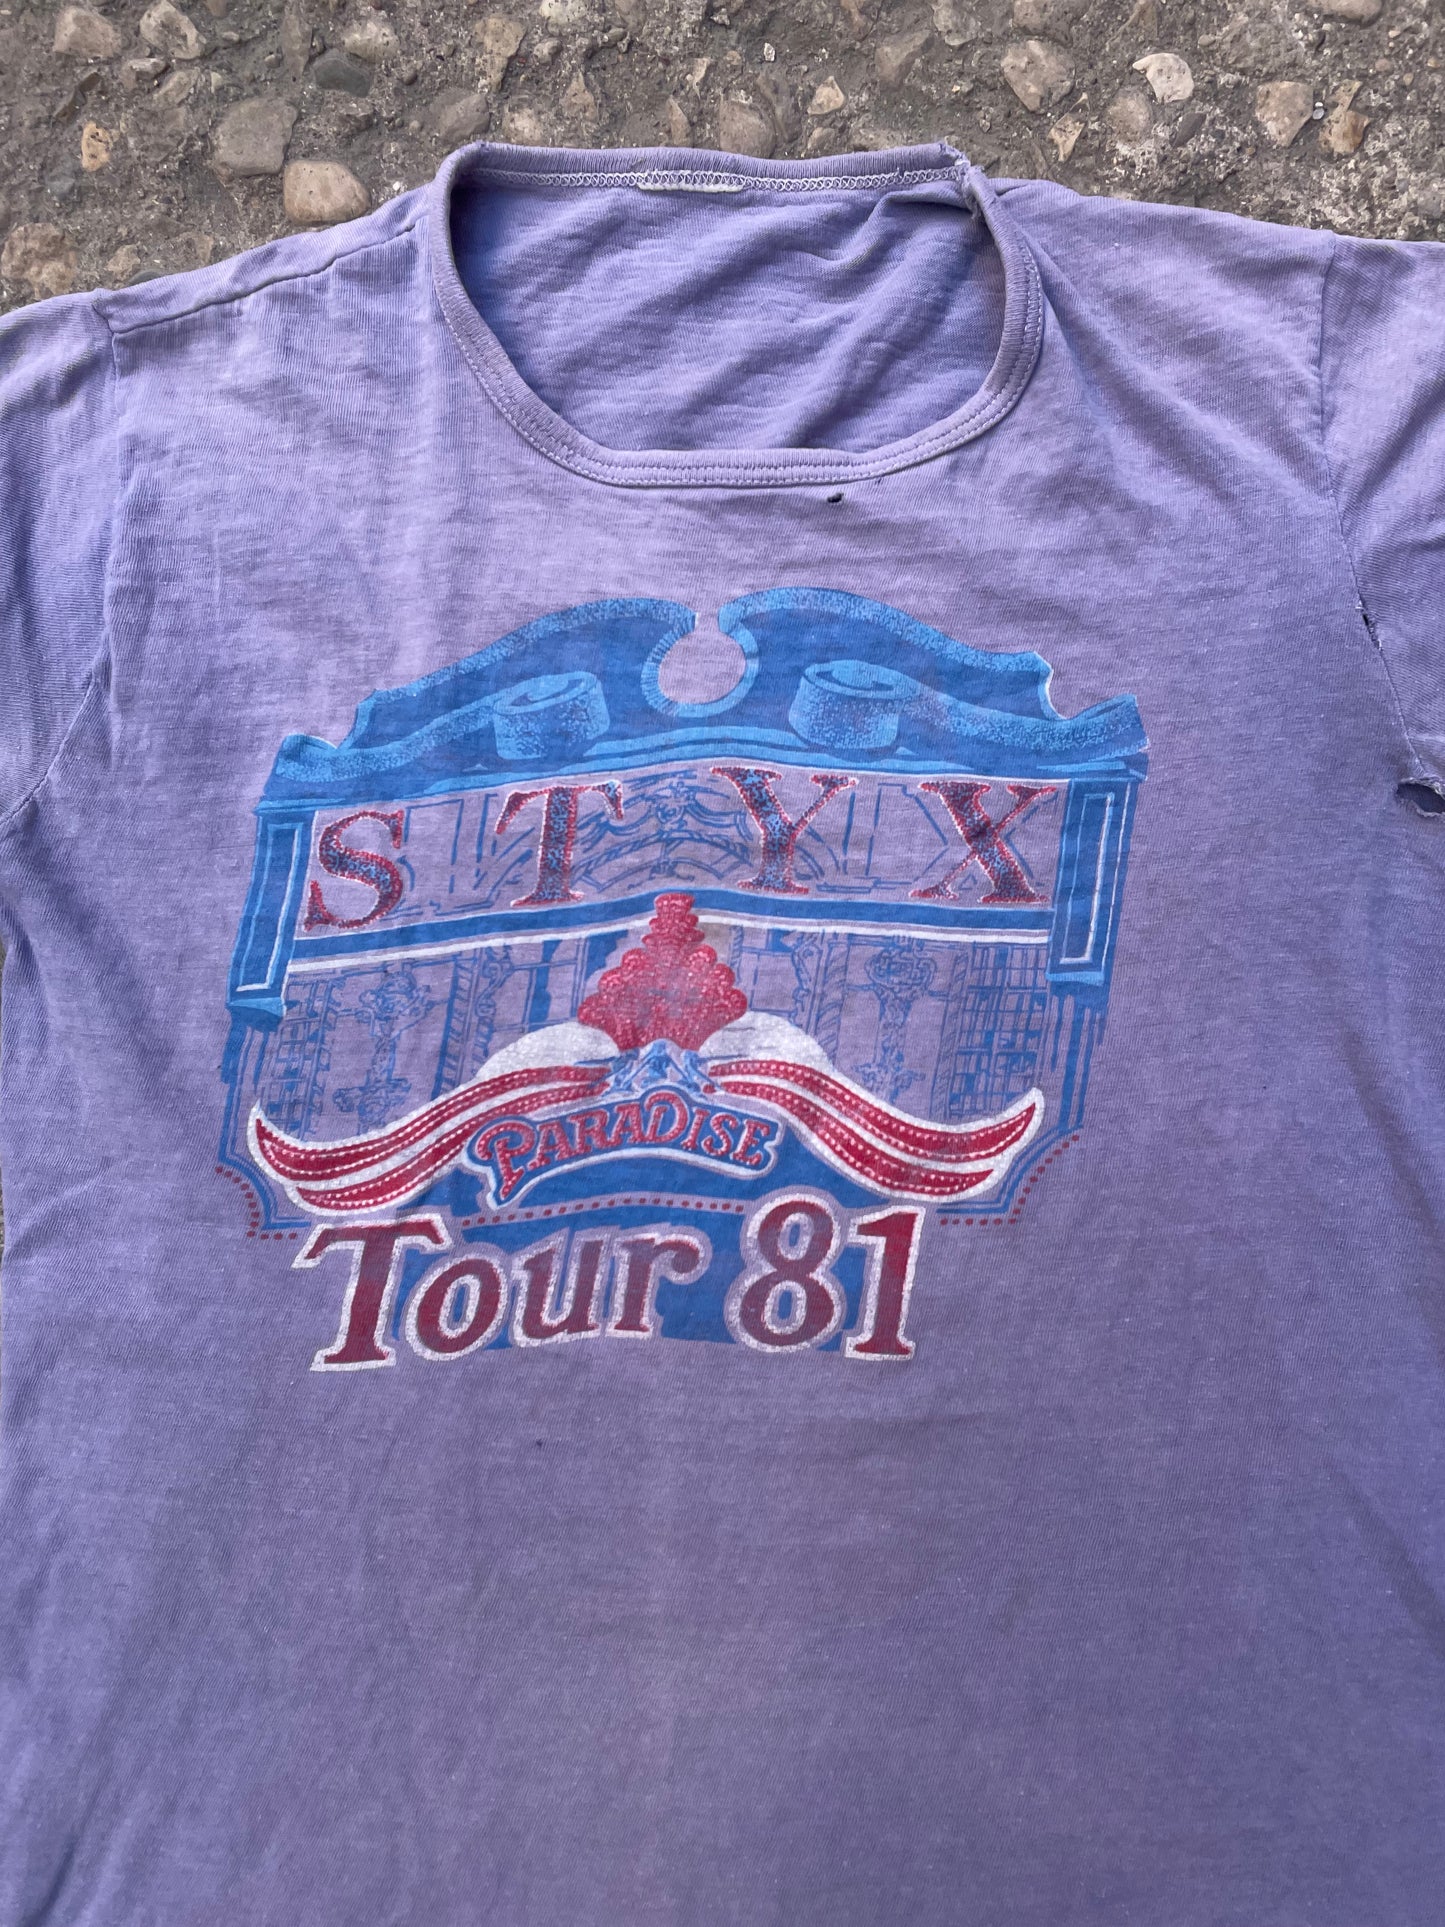 1981 Styx Paradise Tour Graphic Band T-Shirt - M